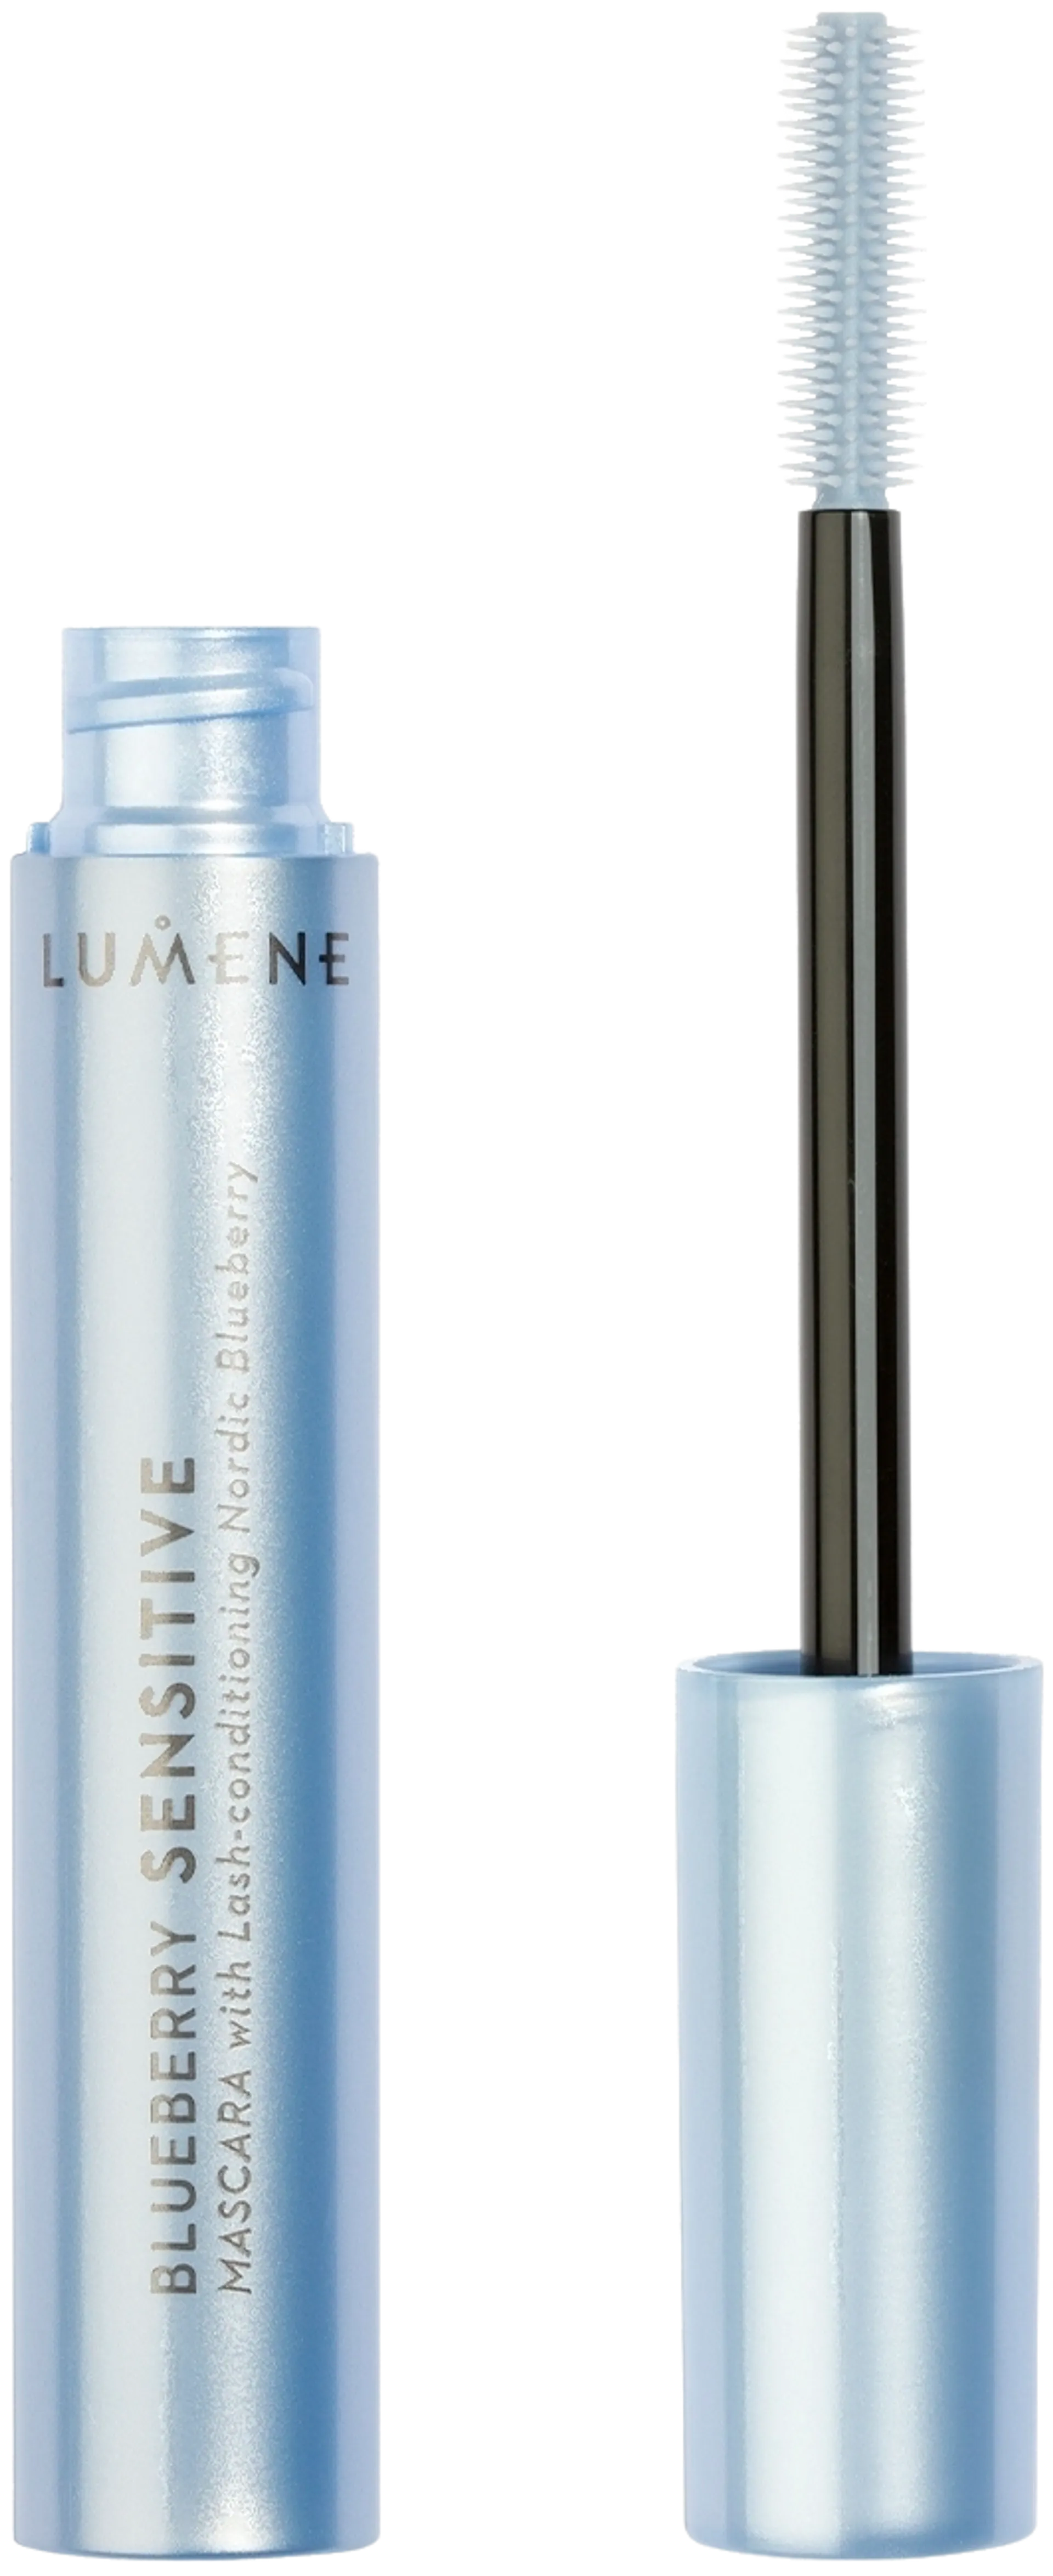 Lumene Blueberry Sensitive Mascara Black 7ml - 2